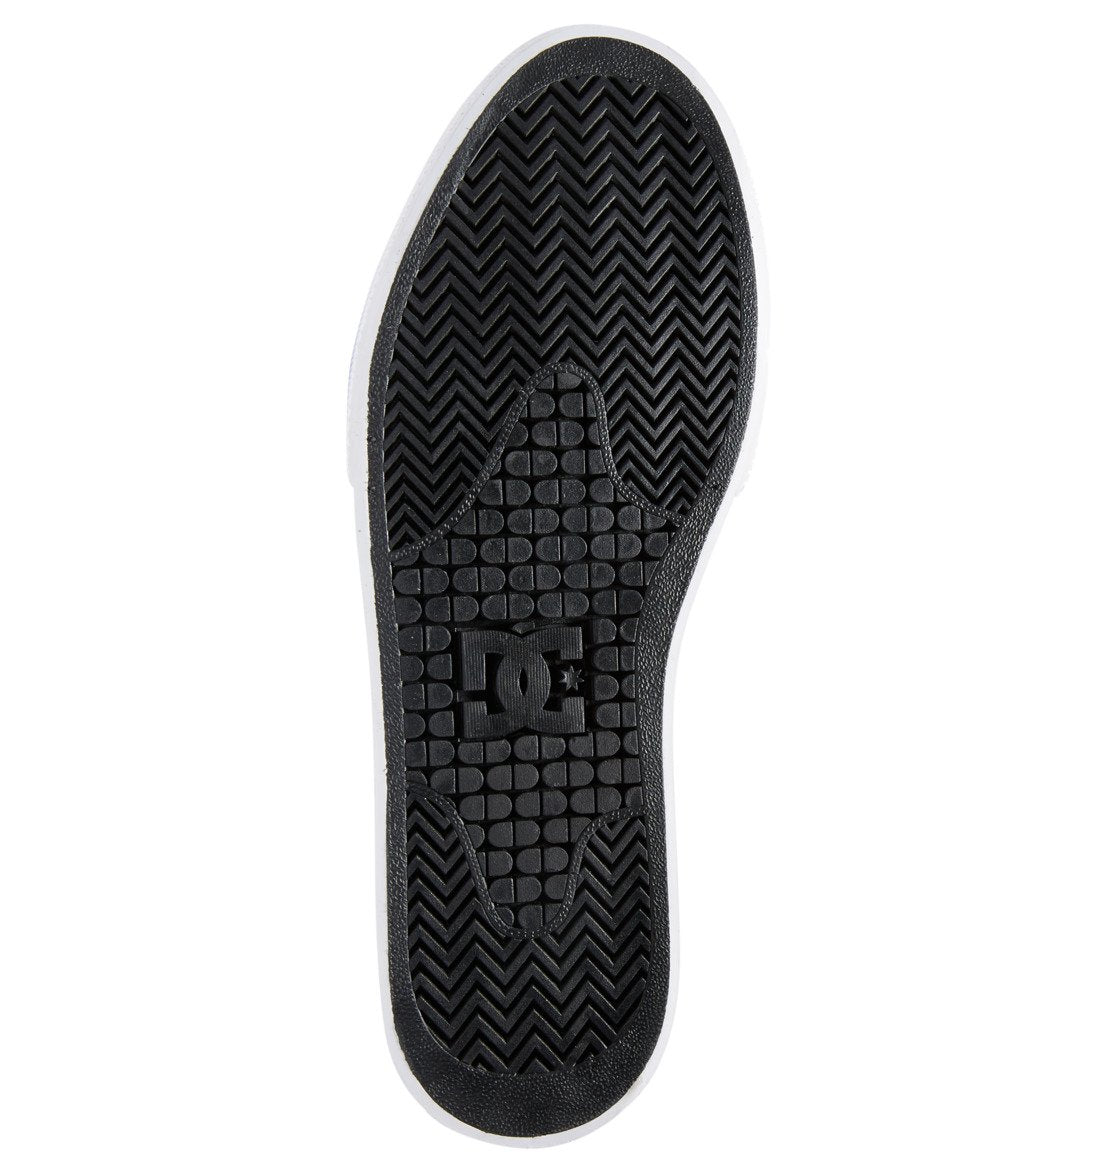  DC Wes Kremer Manual Slipon Slip On Slip-on Shoe Black Grey Gray Bottom Sole